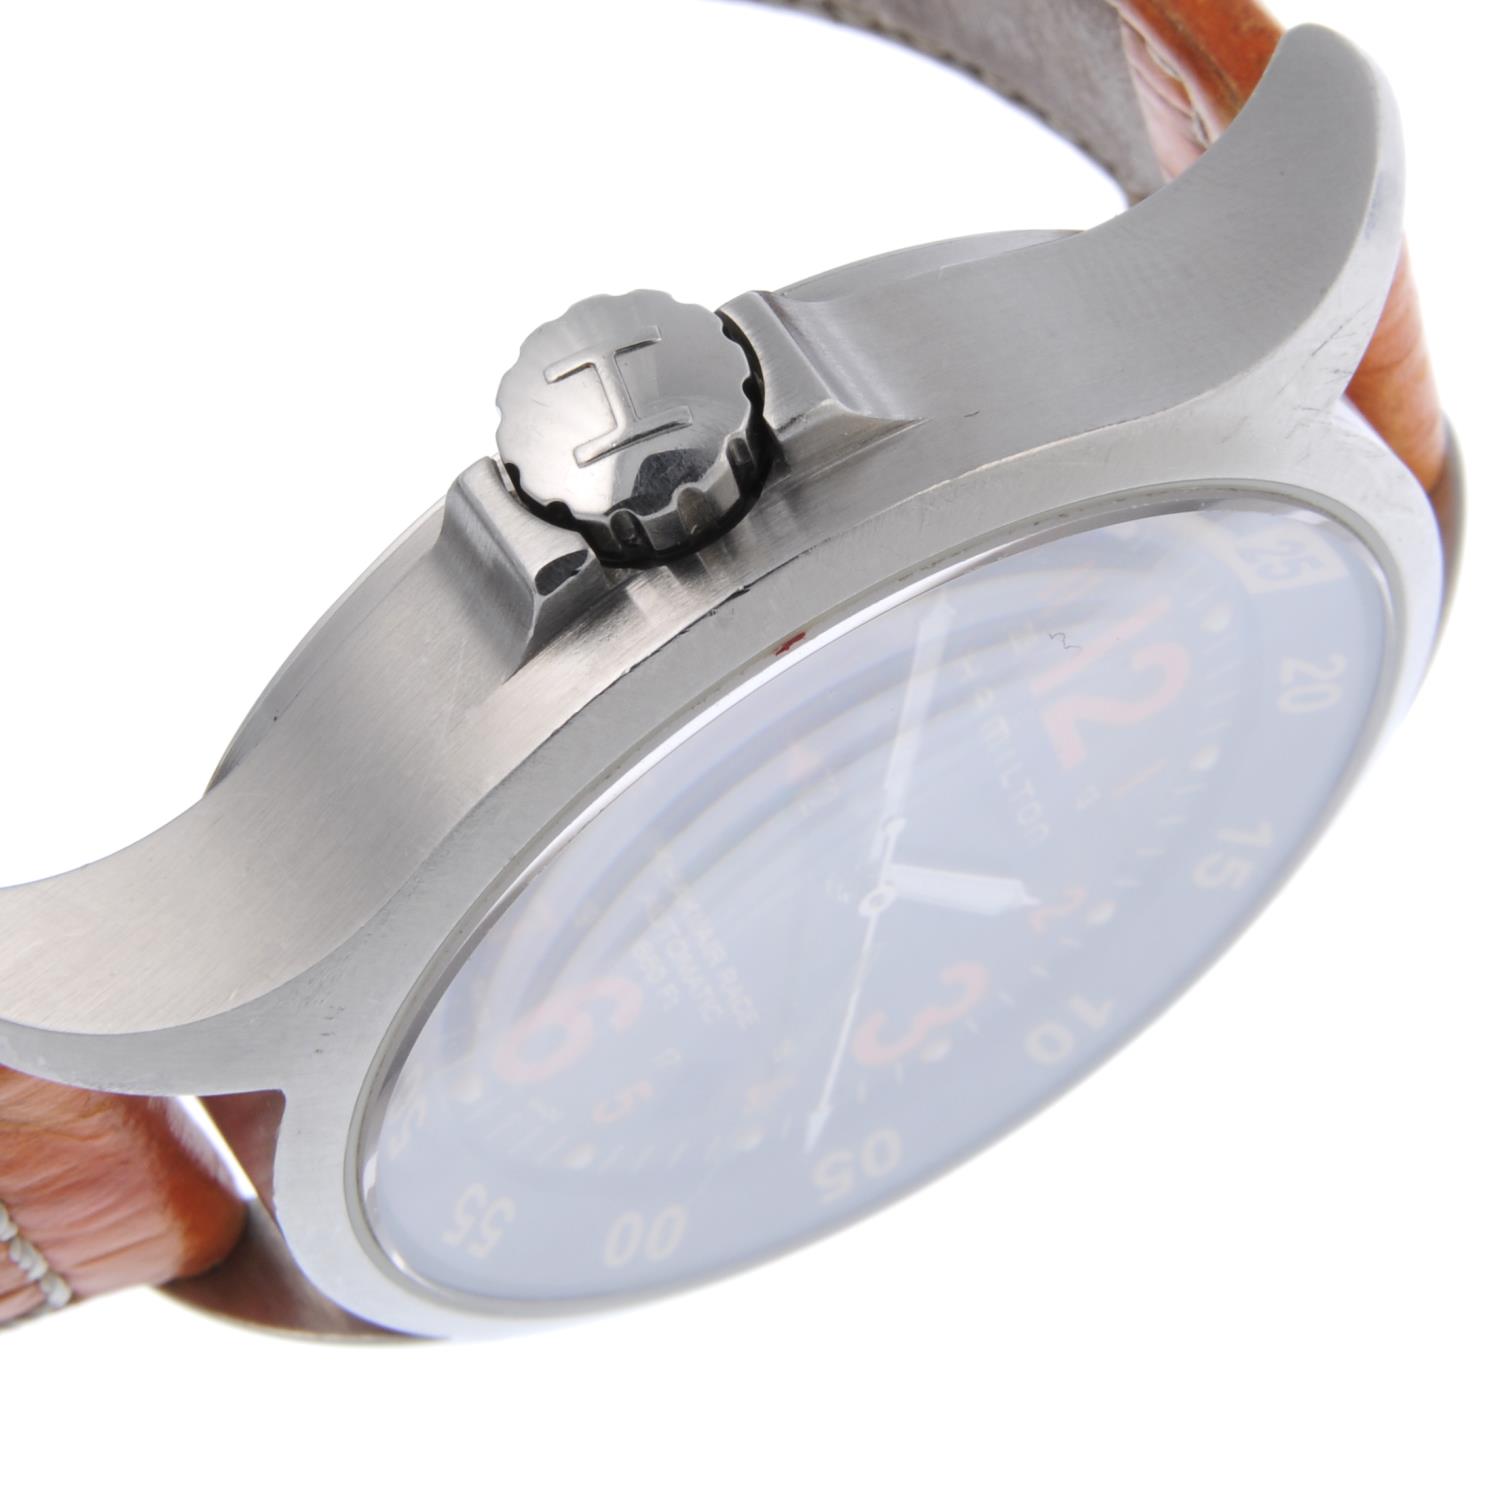 HAMILTON - a gentleman's Khaki Air Race wrist watch. - Image 4 of 5